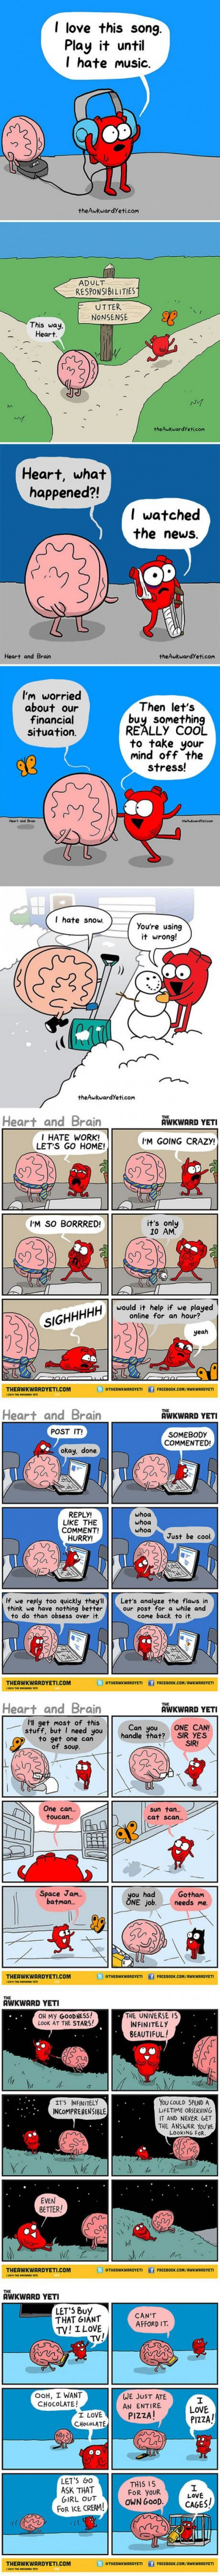 Heart Vs Brain